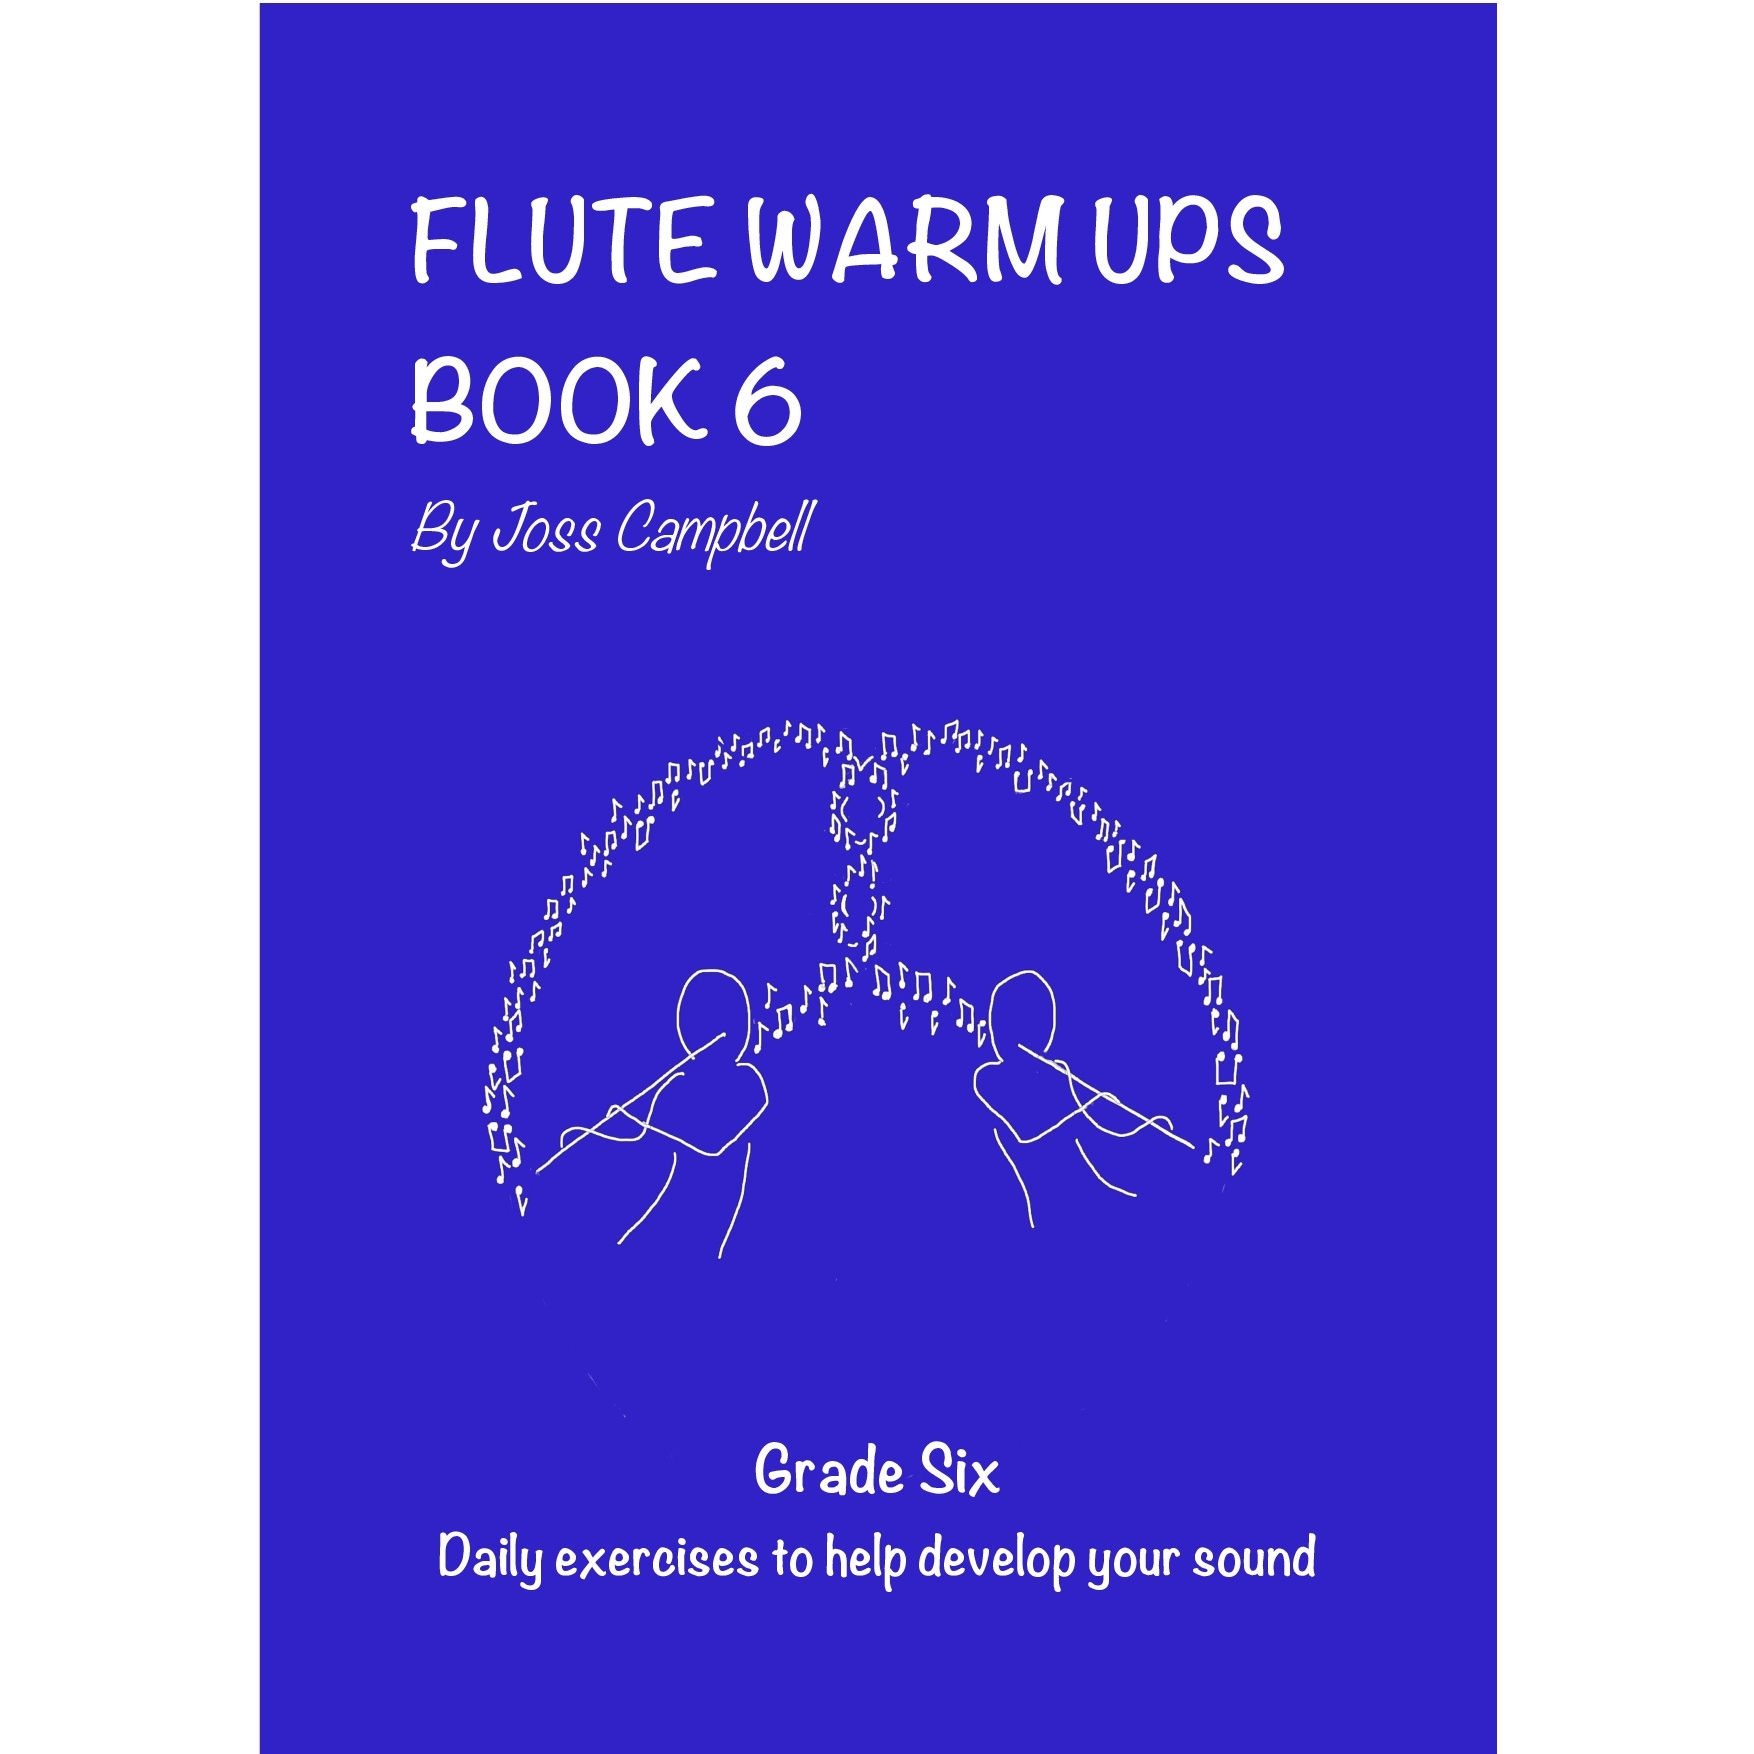 Flute Warm Ups Book J. Campbell. Just Flutes, London